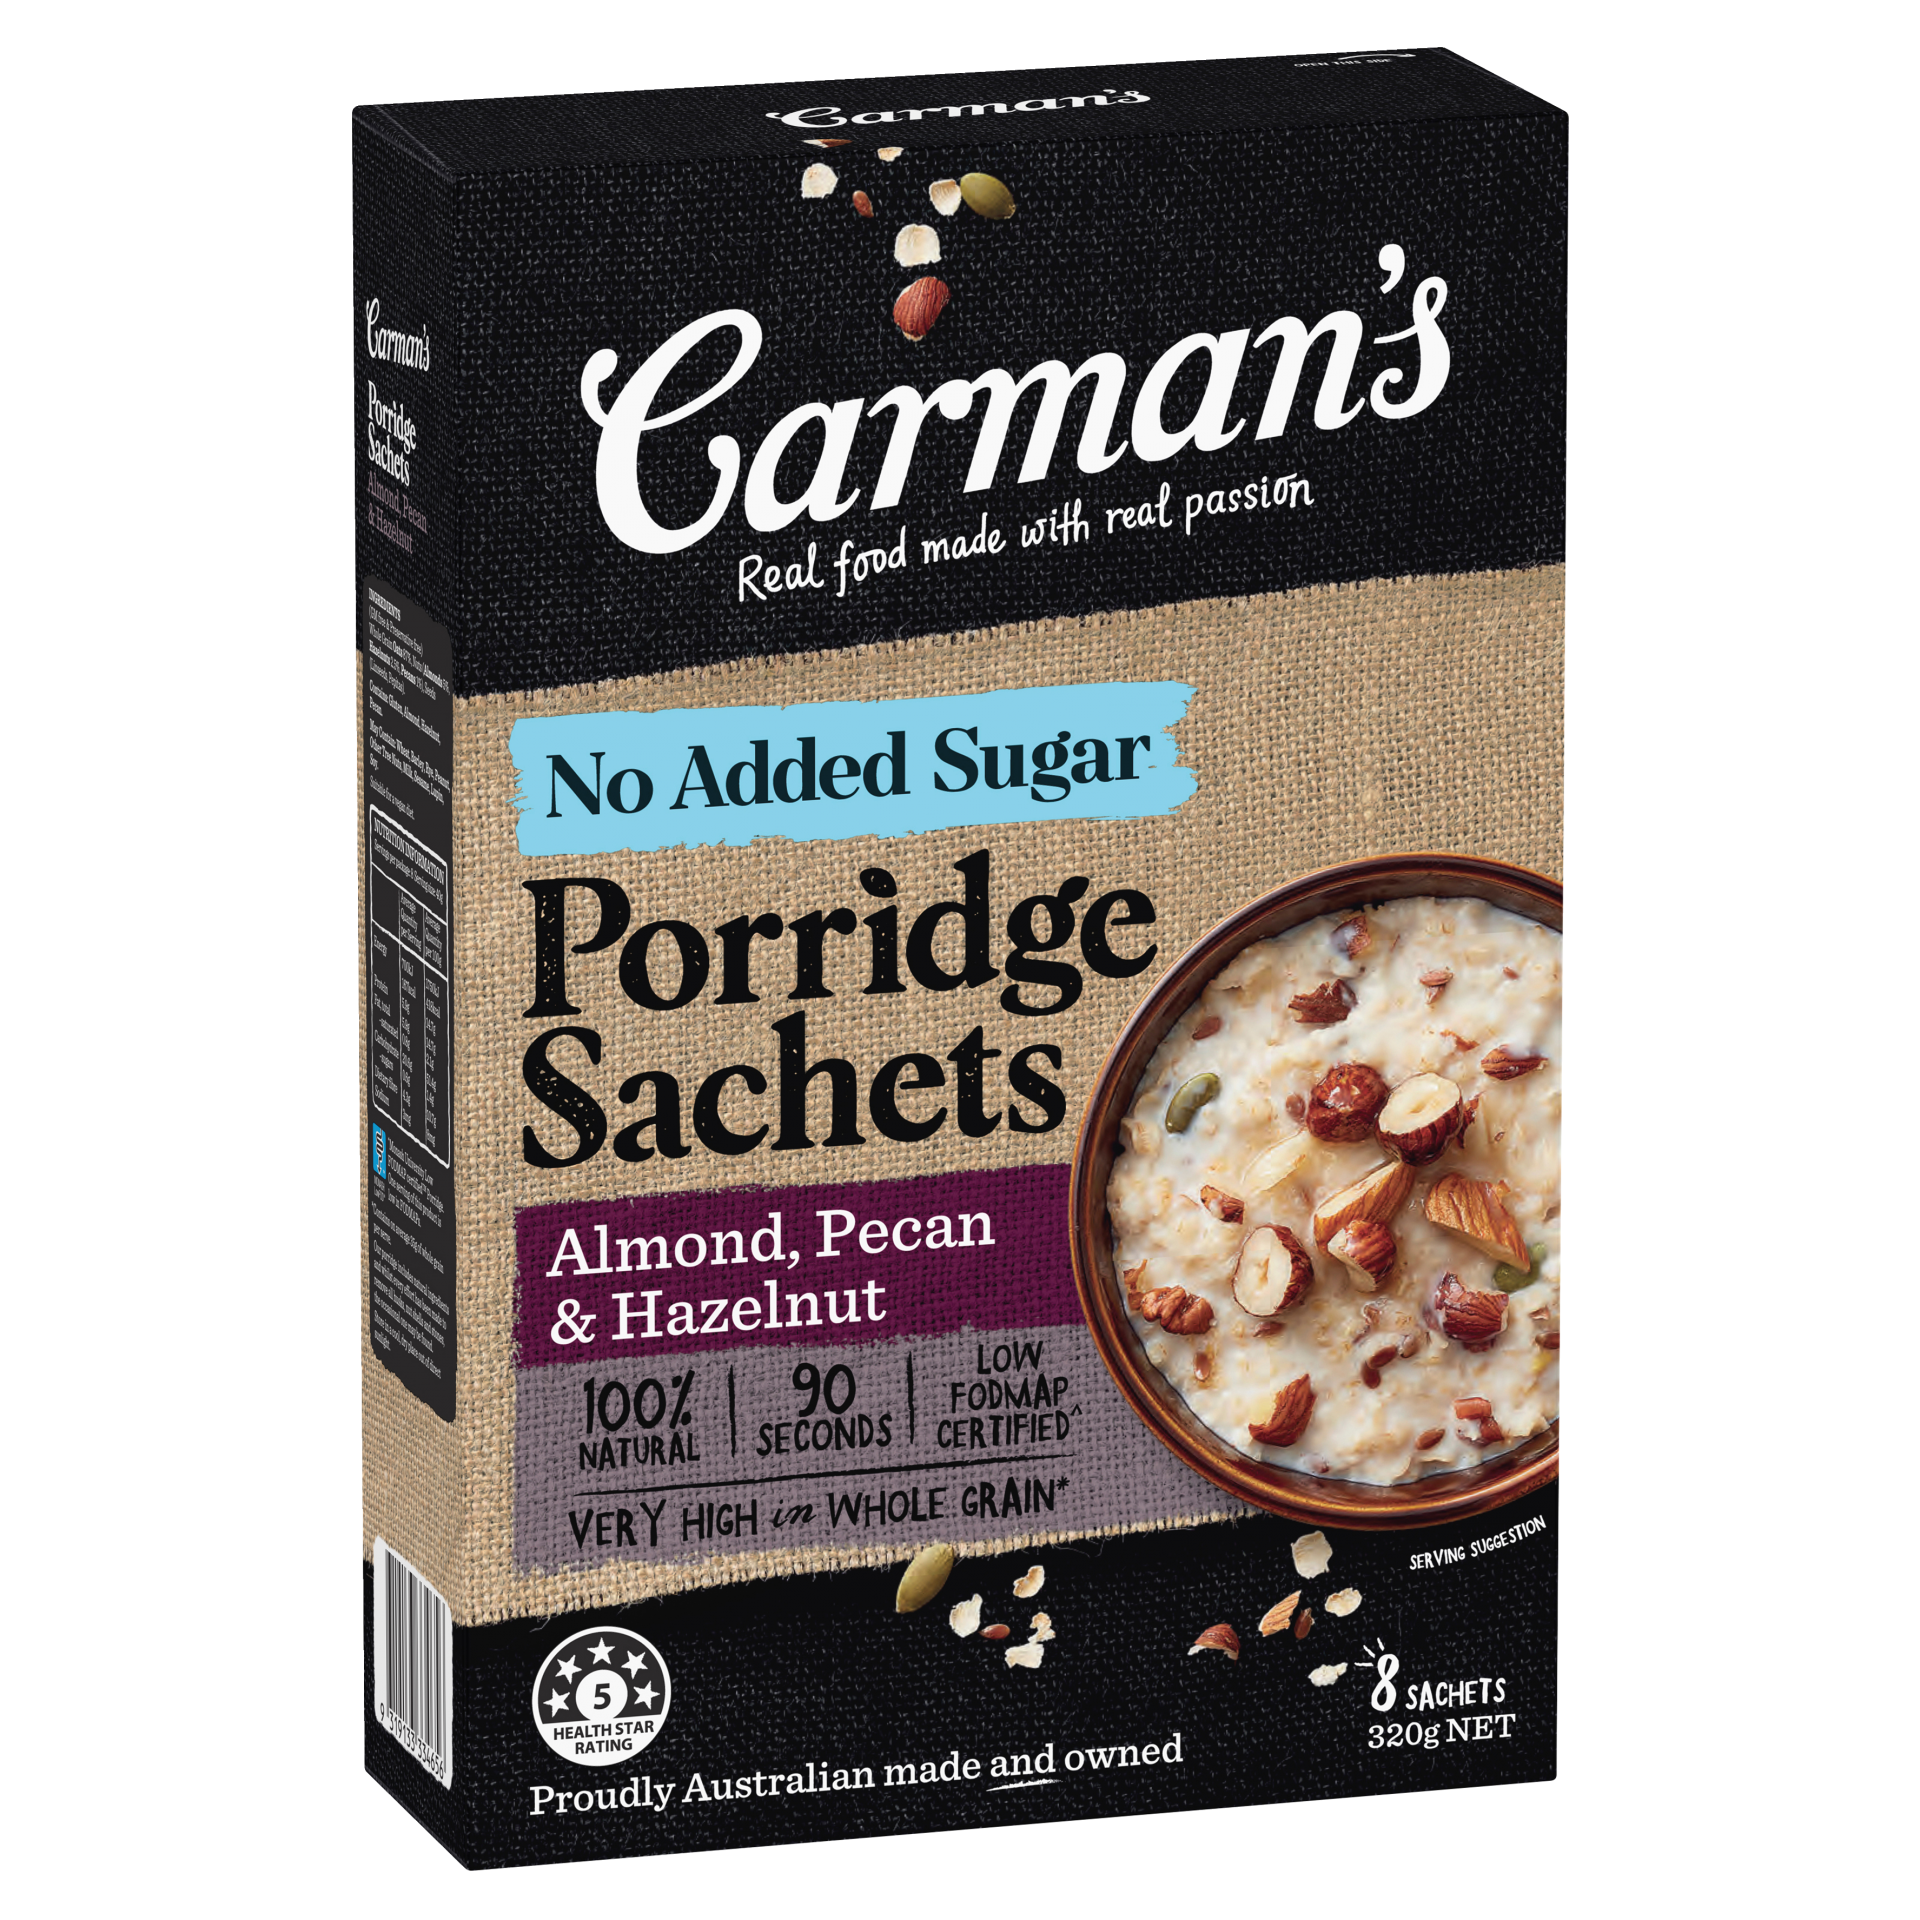 Almond, Pecan & Hazelnut Porridge Sachets